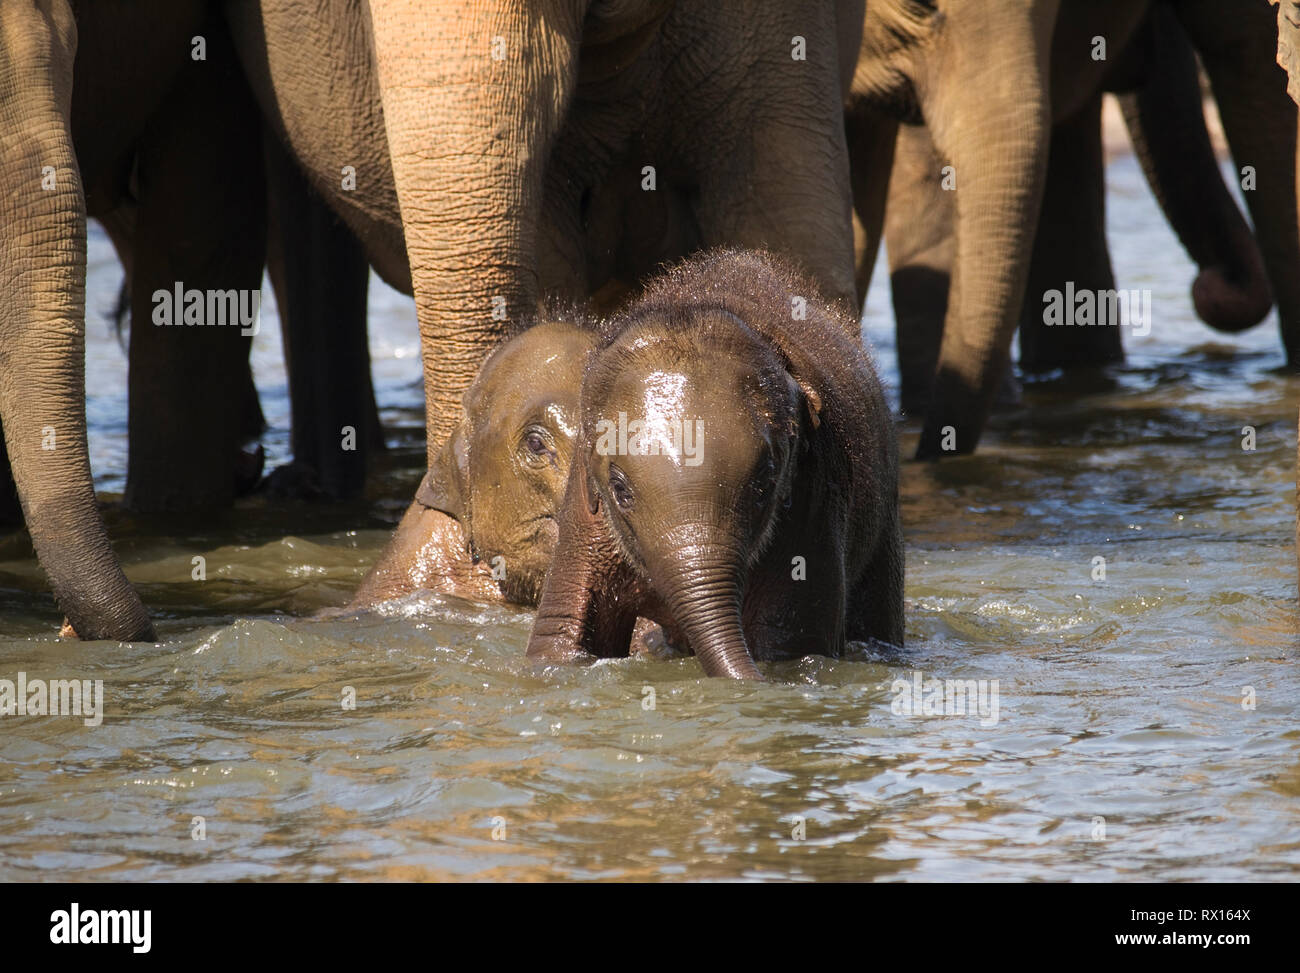 Baby elephant having fun in river bath Stock Photo